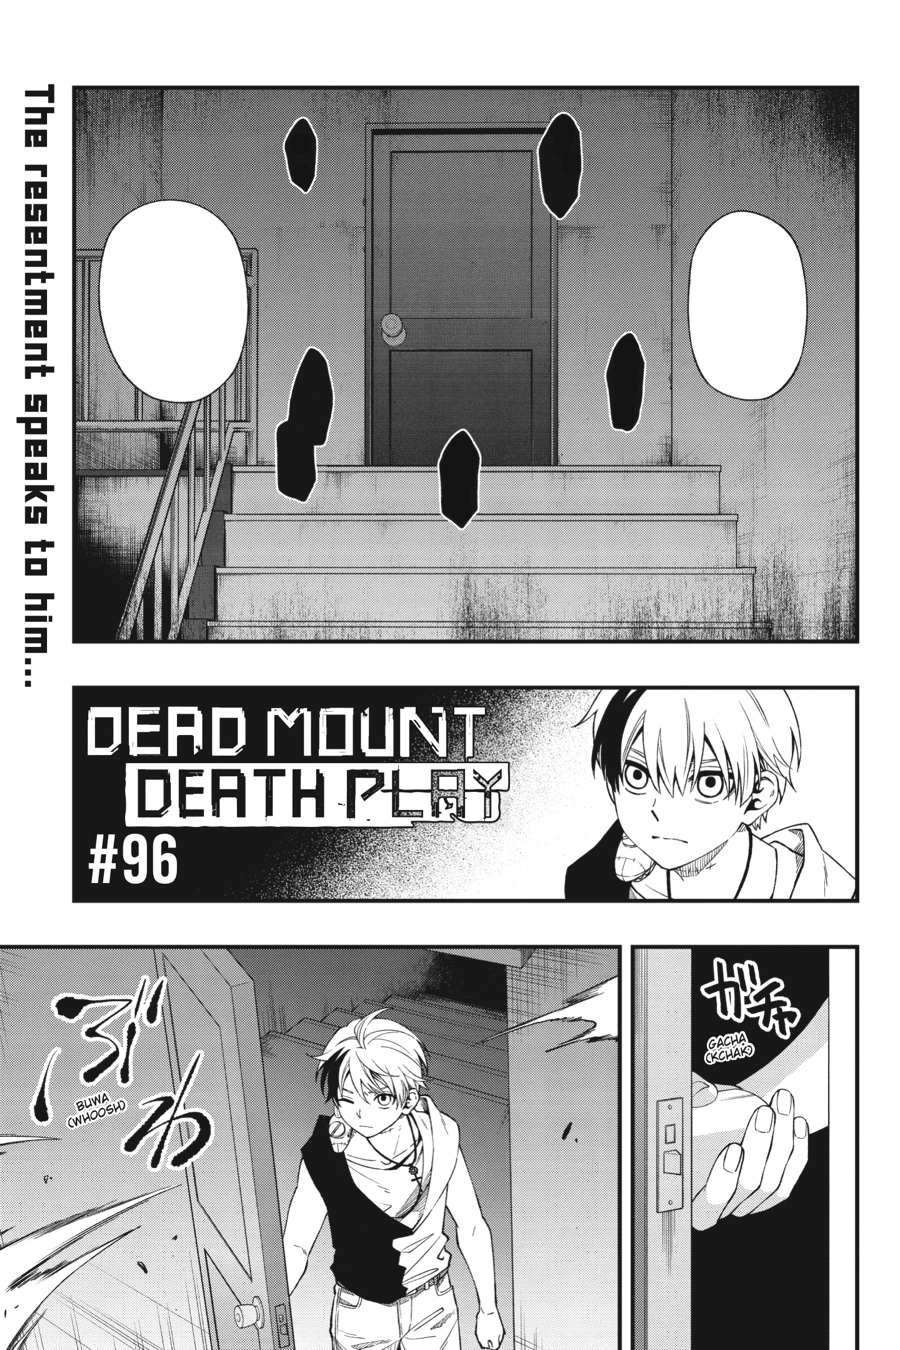 Is anybody reading dead mount death play? I don't really hear